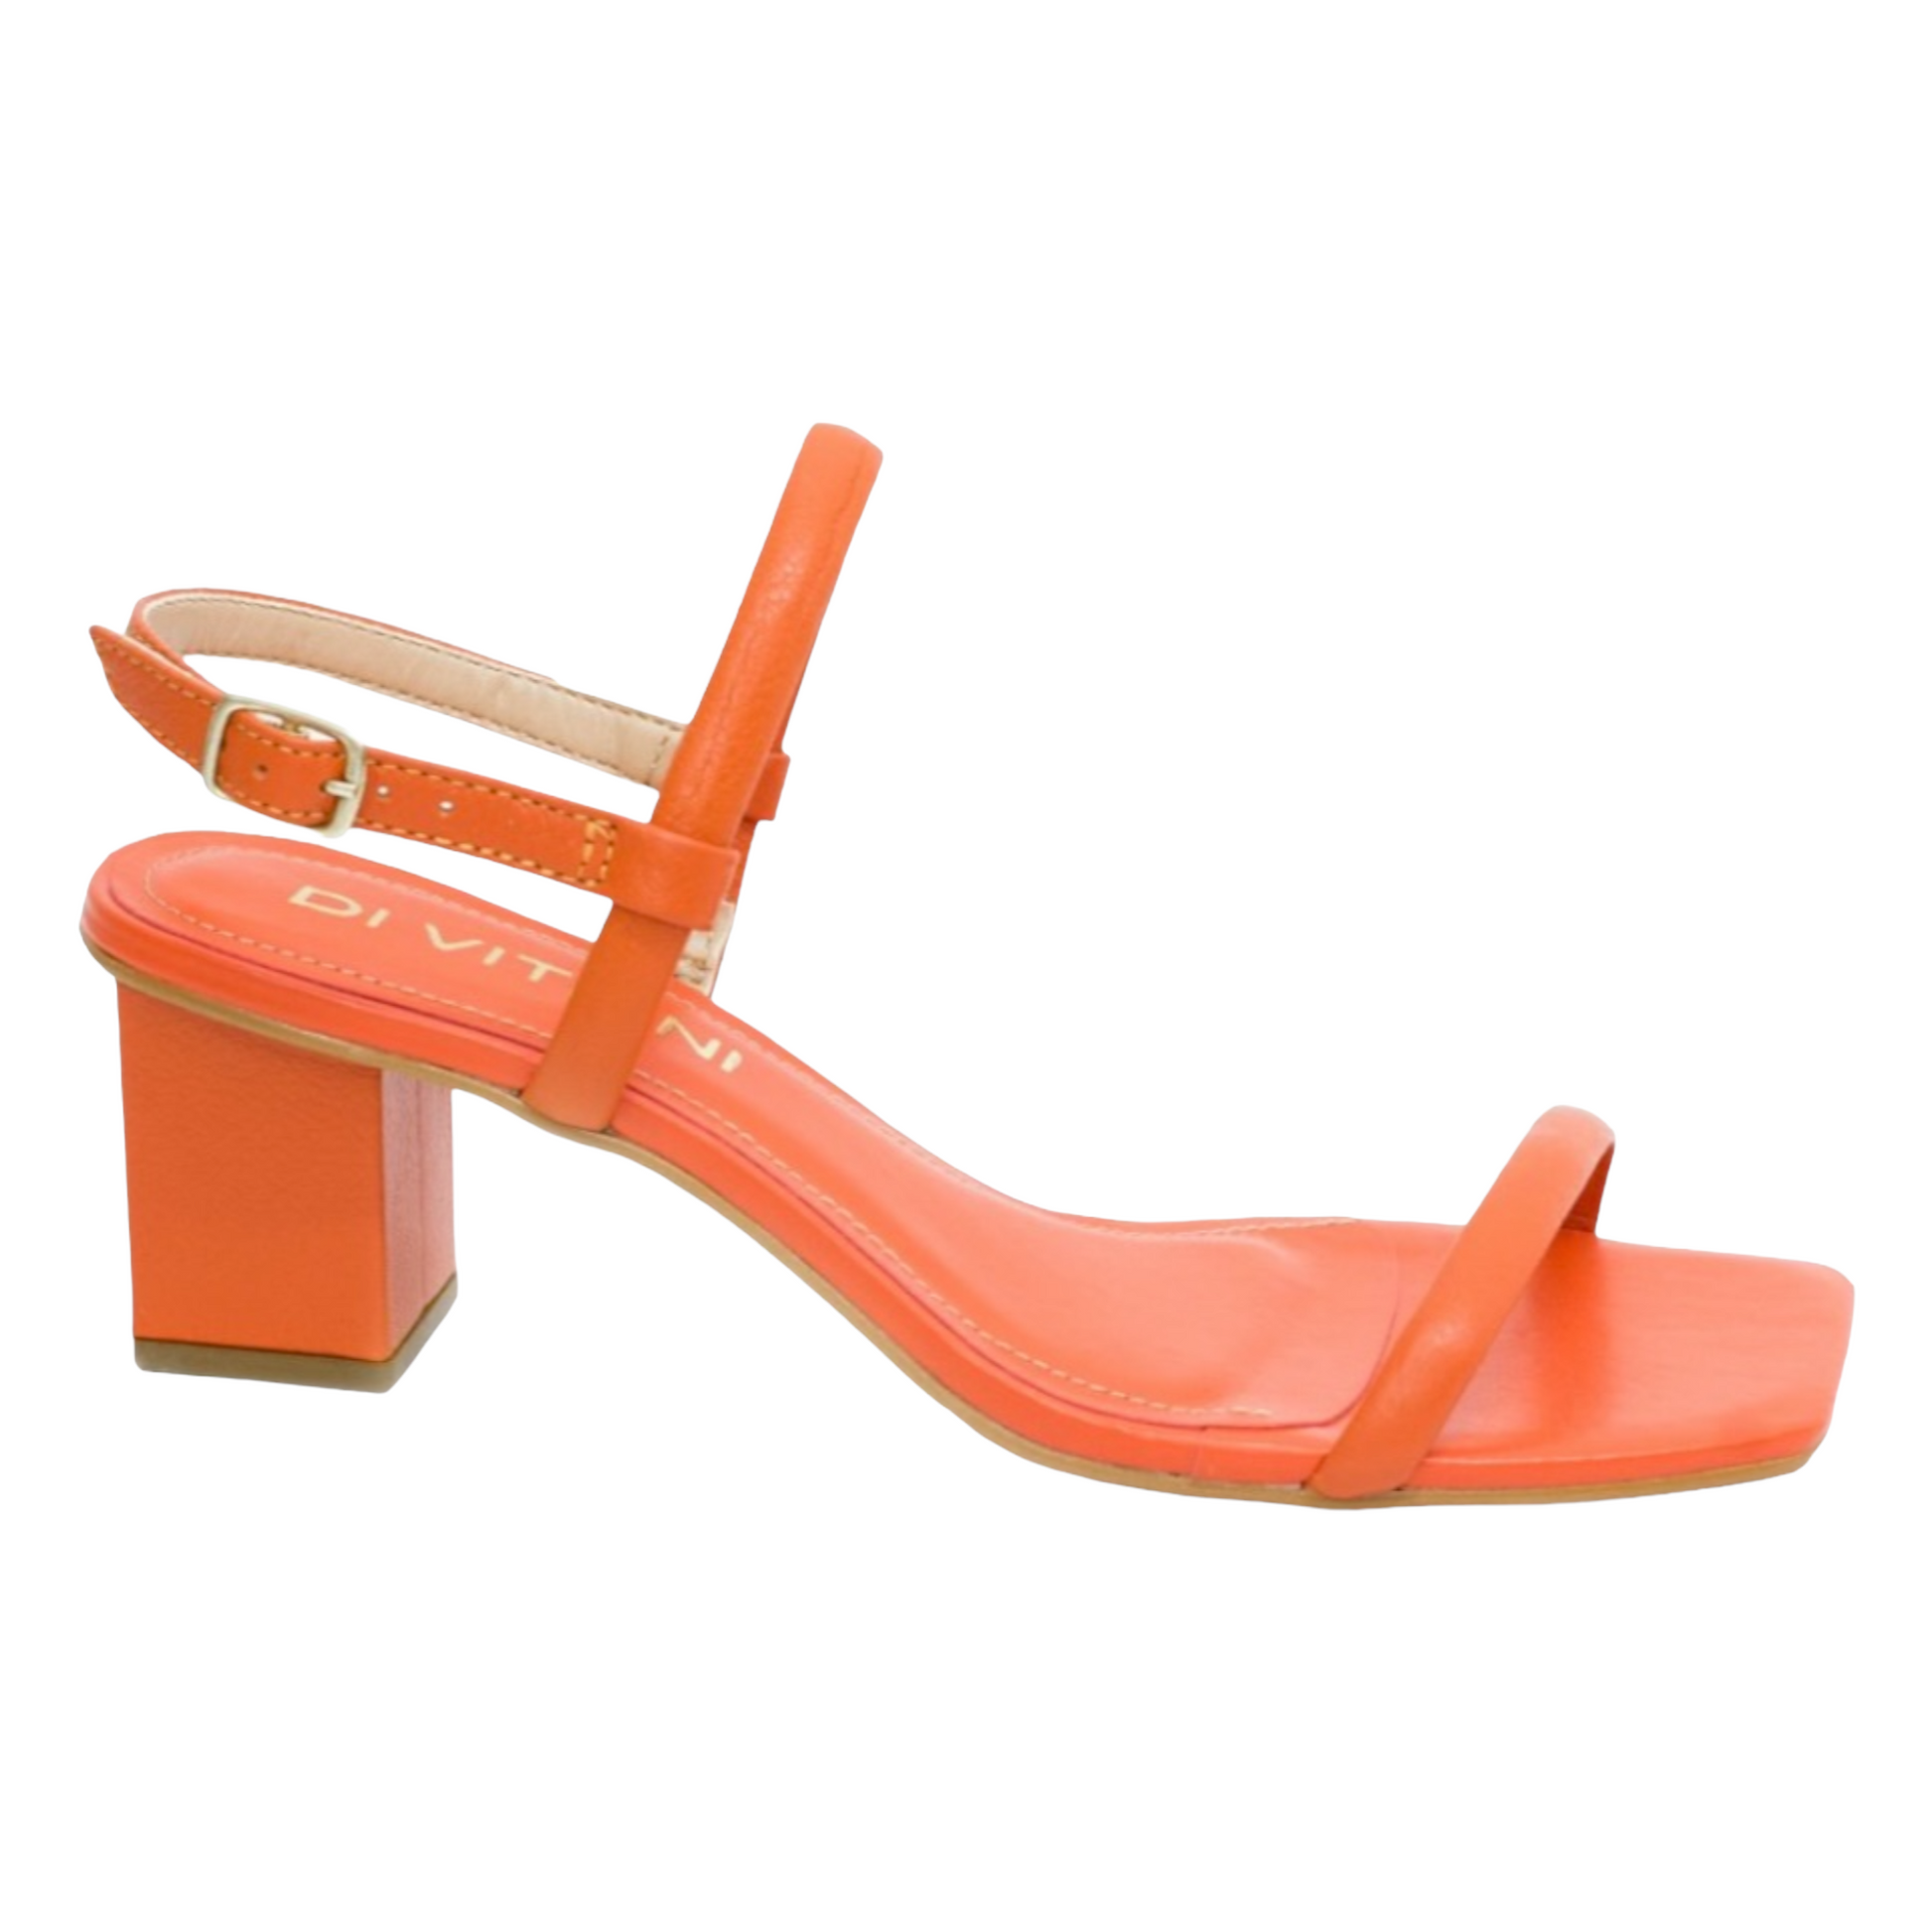 Rio Orange Leather Heeled Sandal - Julia & Santos 